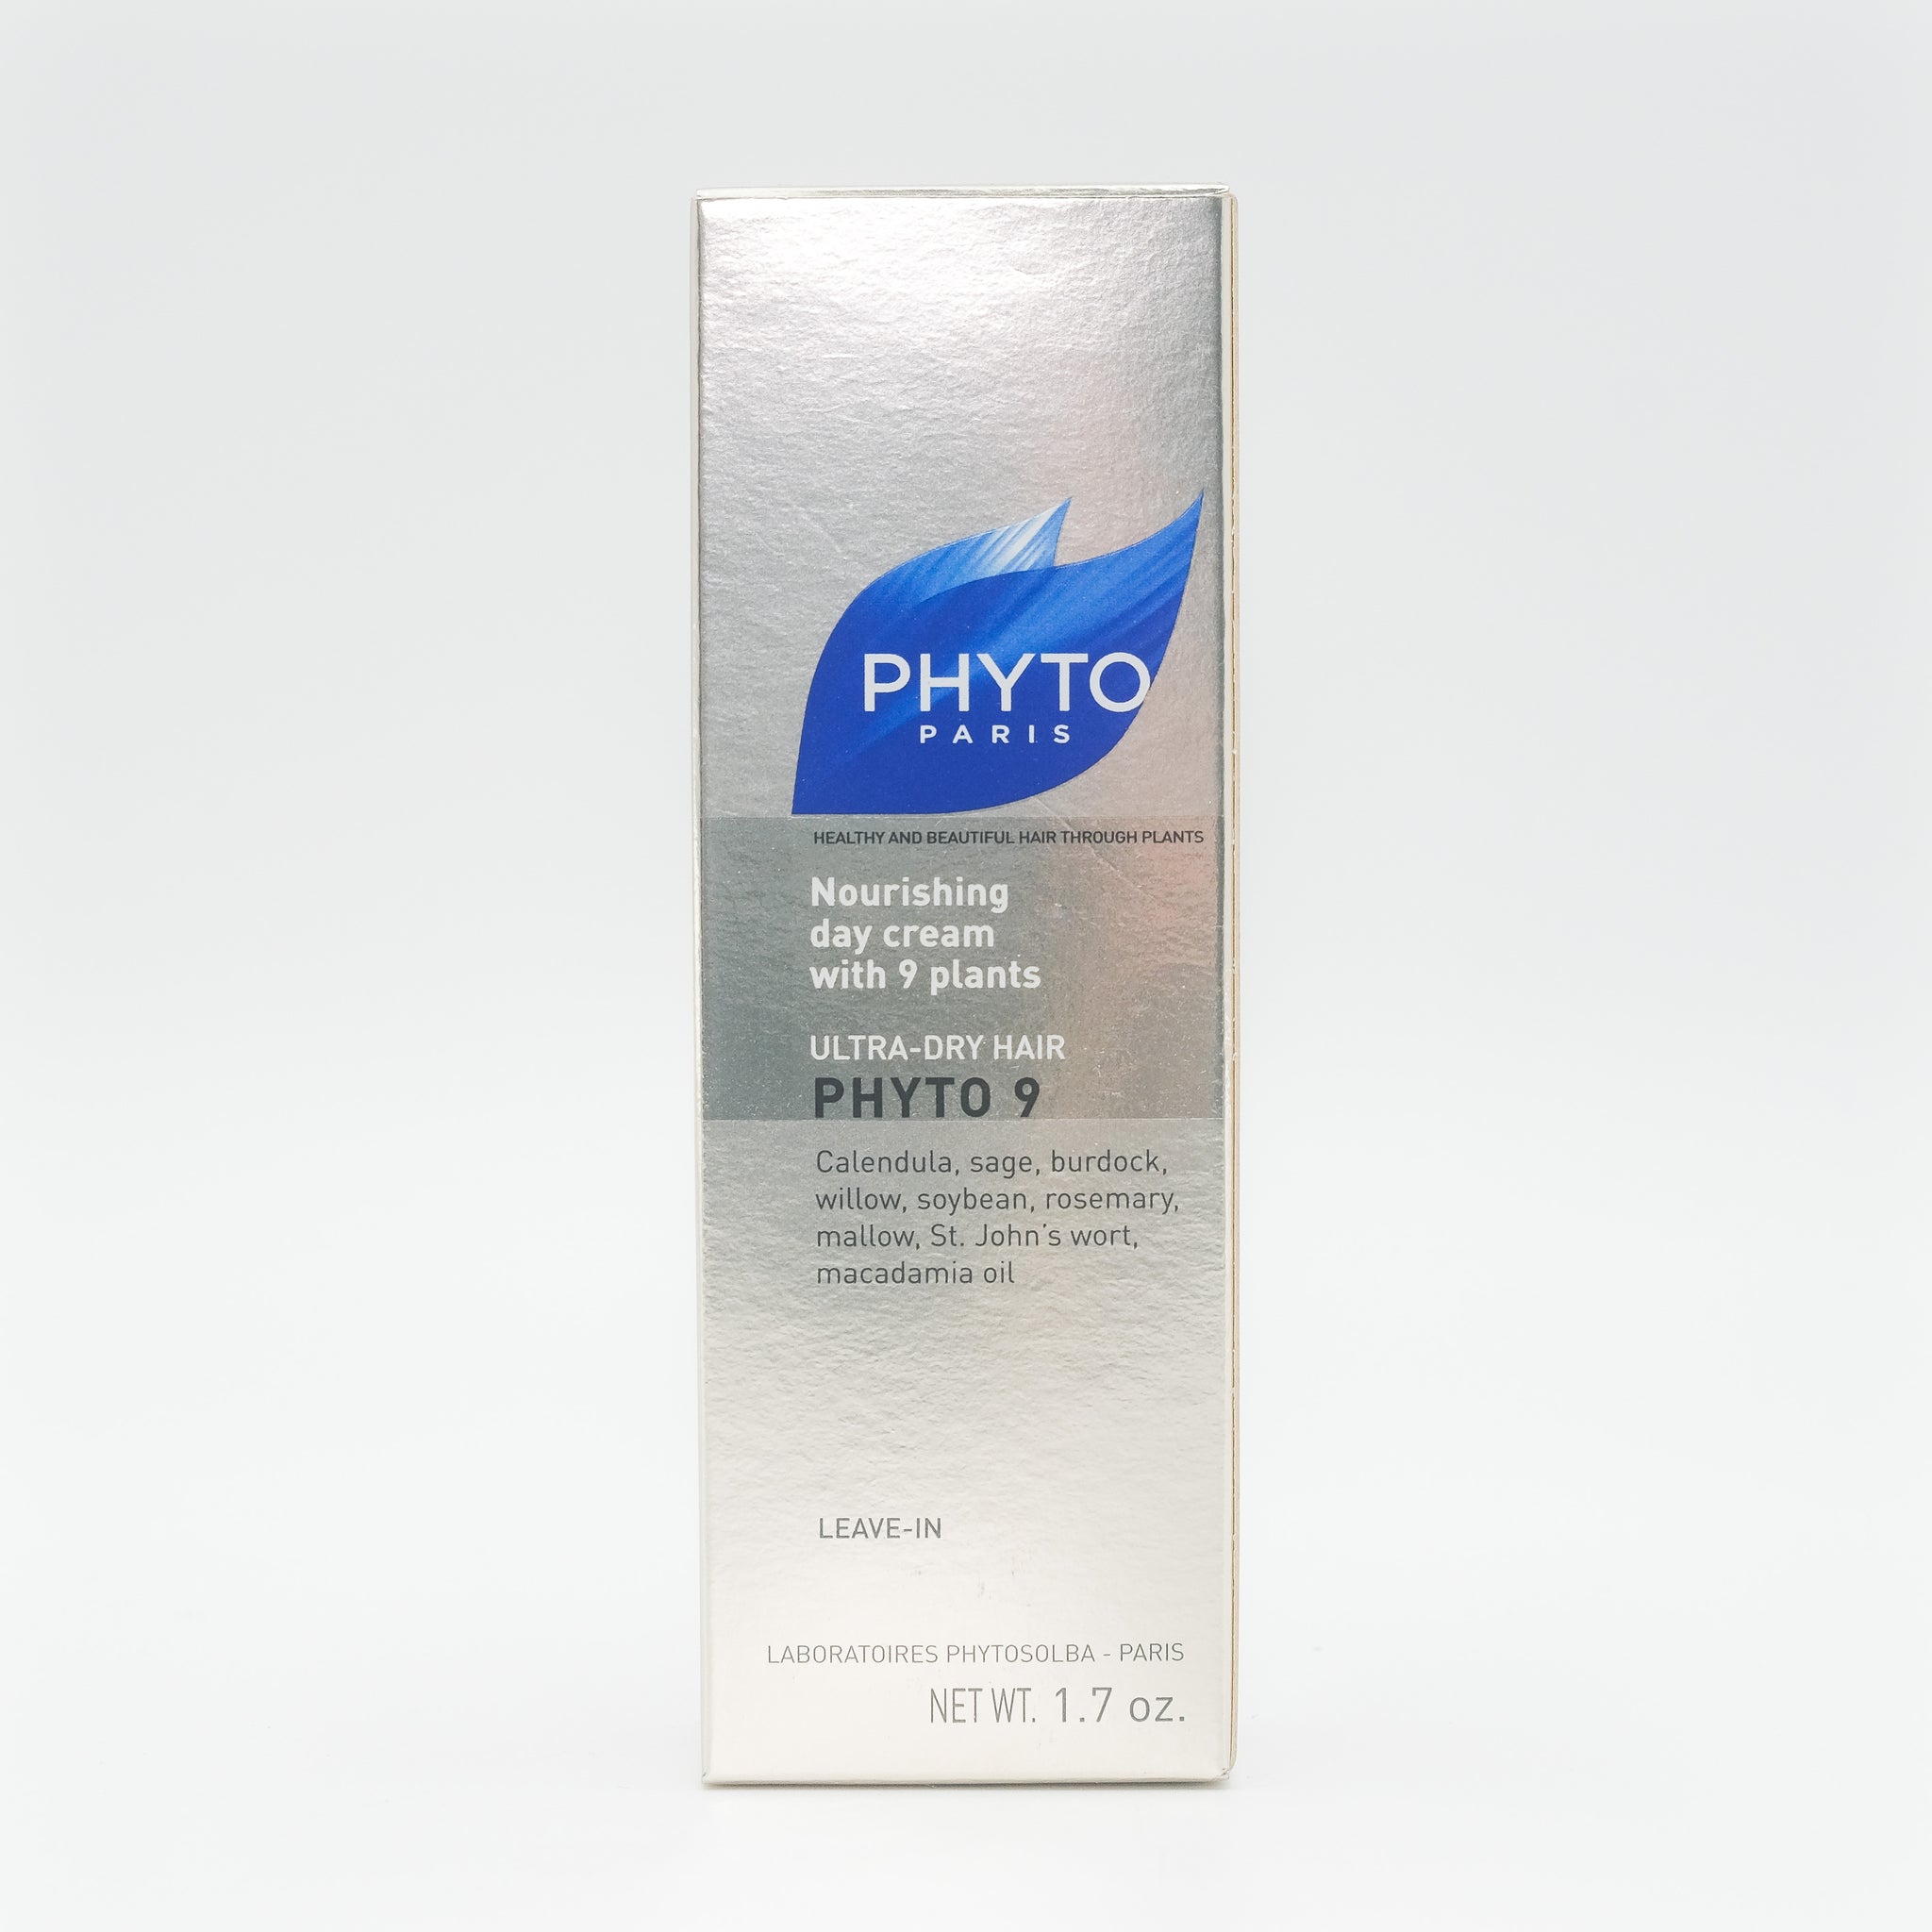 PHYTO PARIS Nourishing Day Cream Phyto 9 Leave In 1.7 oz